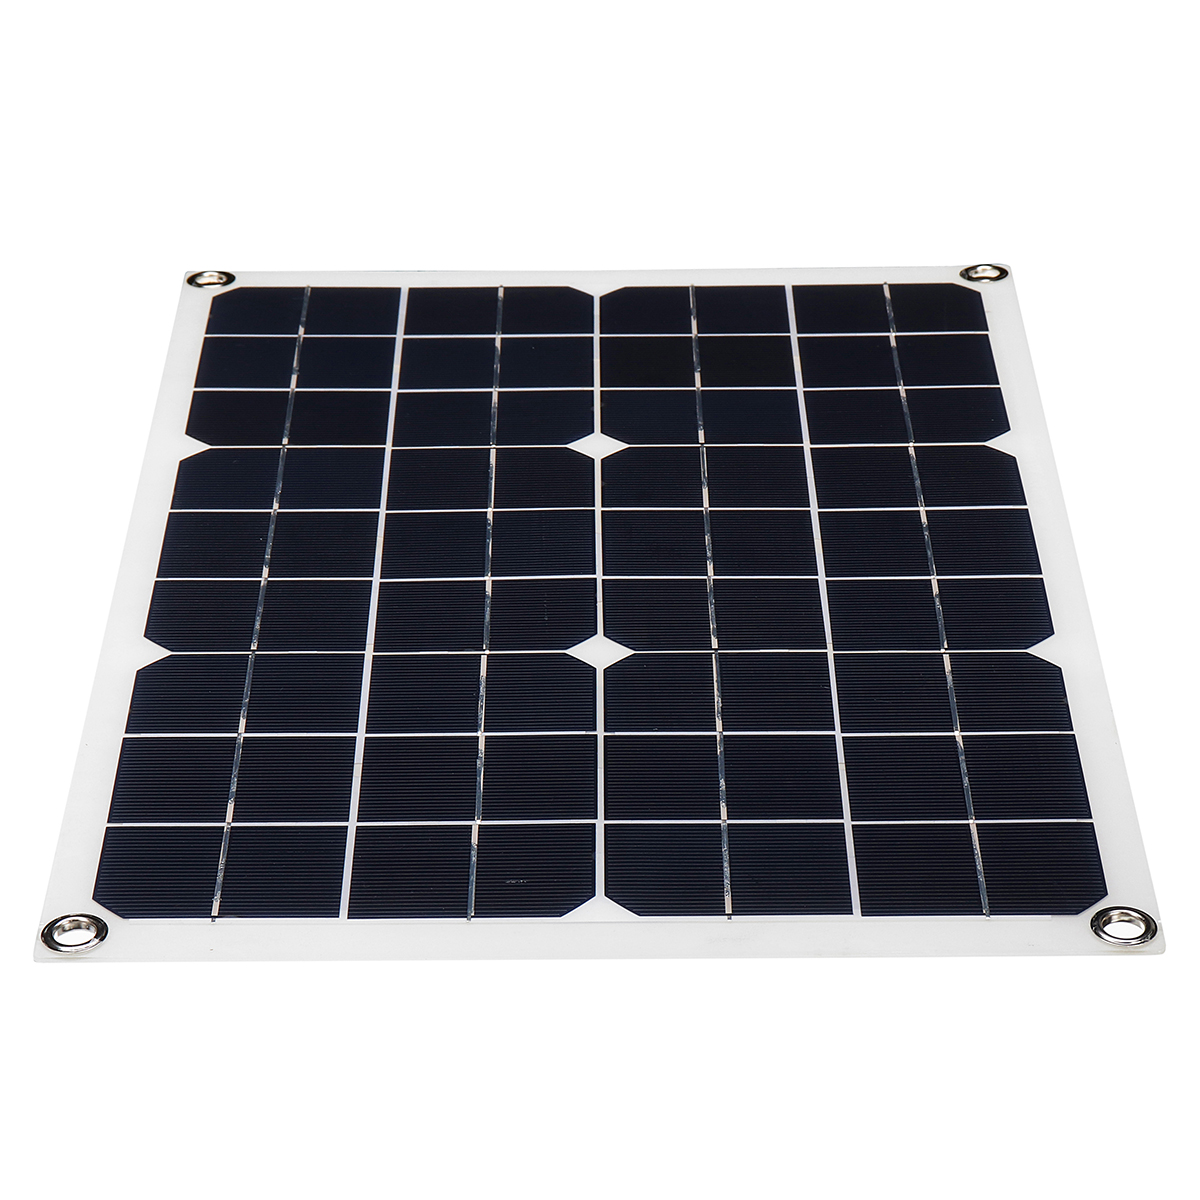 20W 430*280*2.5mm Monocrystalline Solar Panel with 18V DC Plug & 5V USB Output High Efficiency & Light Weight 13